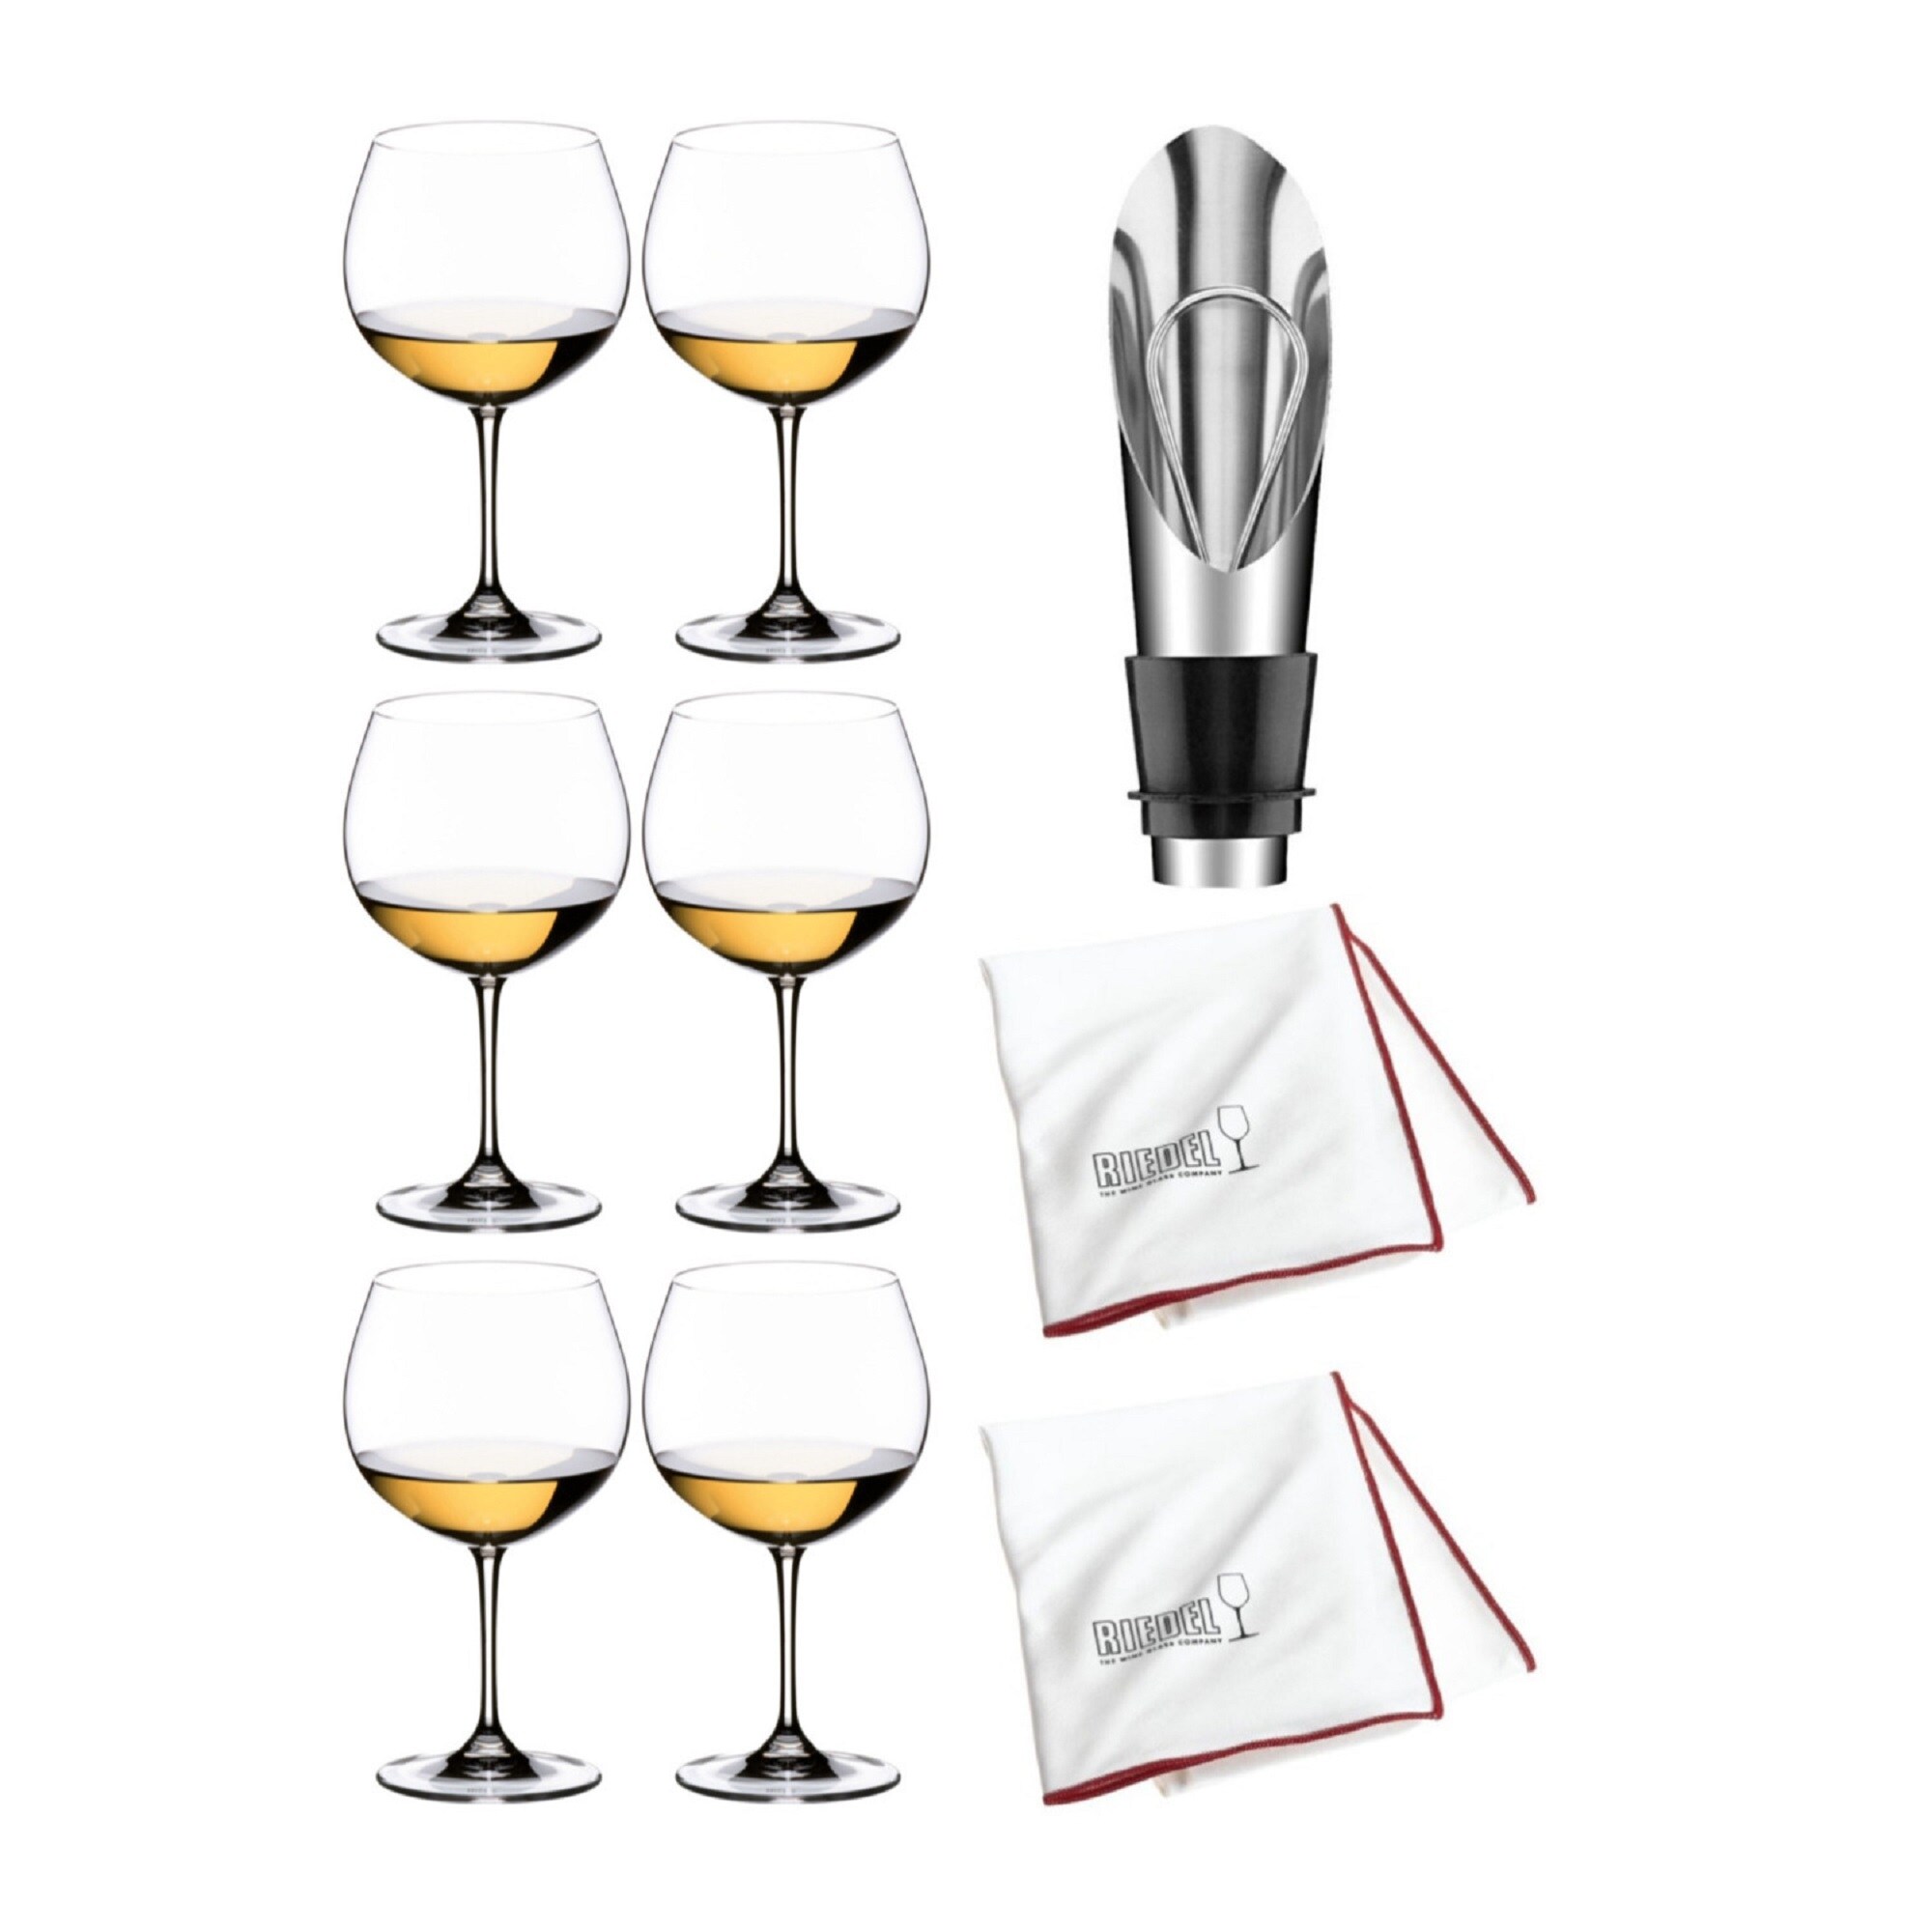 https://ak1.ostkcdn.com/images/products/is/images/direct/6dfef4acd4ae35a50d176dd65b3402dc642d18fd/Riedel-Vinum-Oaked-Chardonnay--Montrachet-Glass-%286-Pack%29-Bundle.jpg